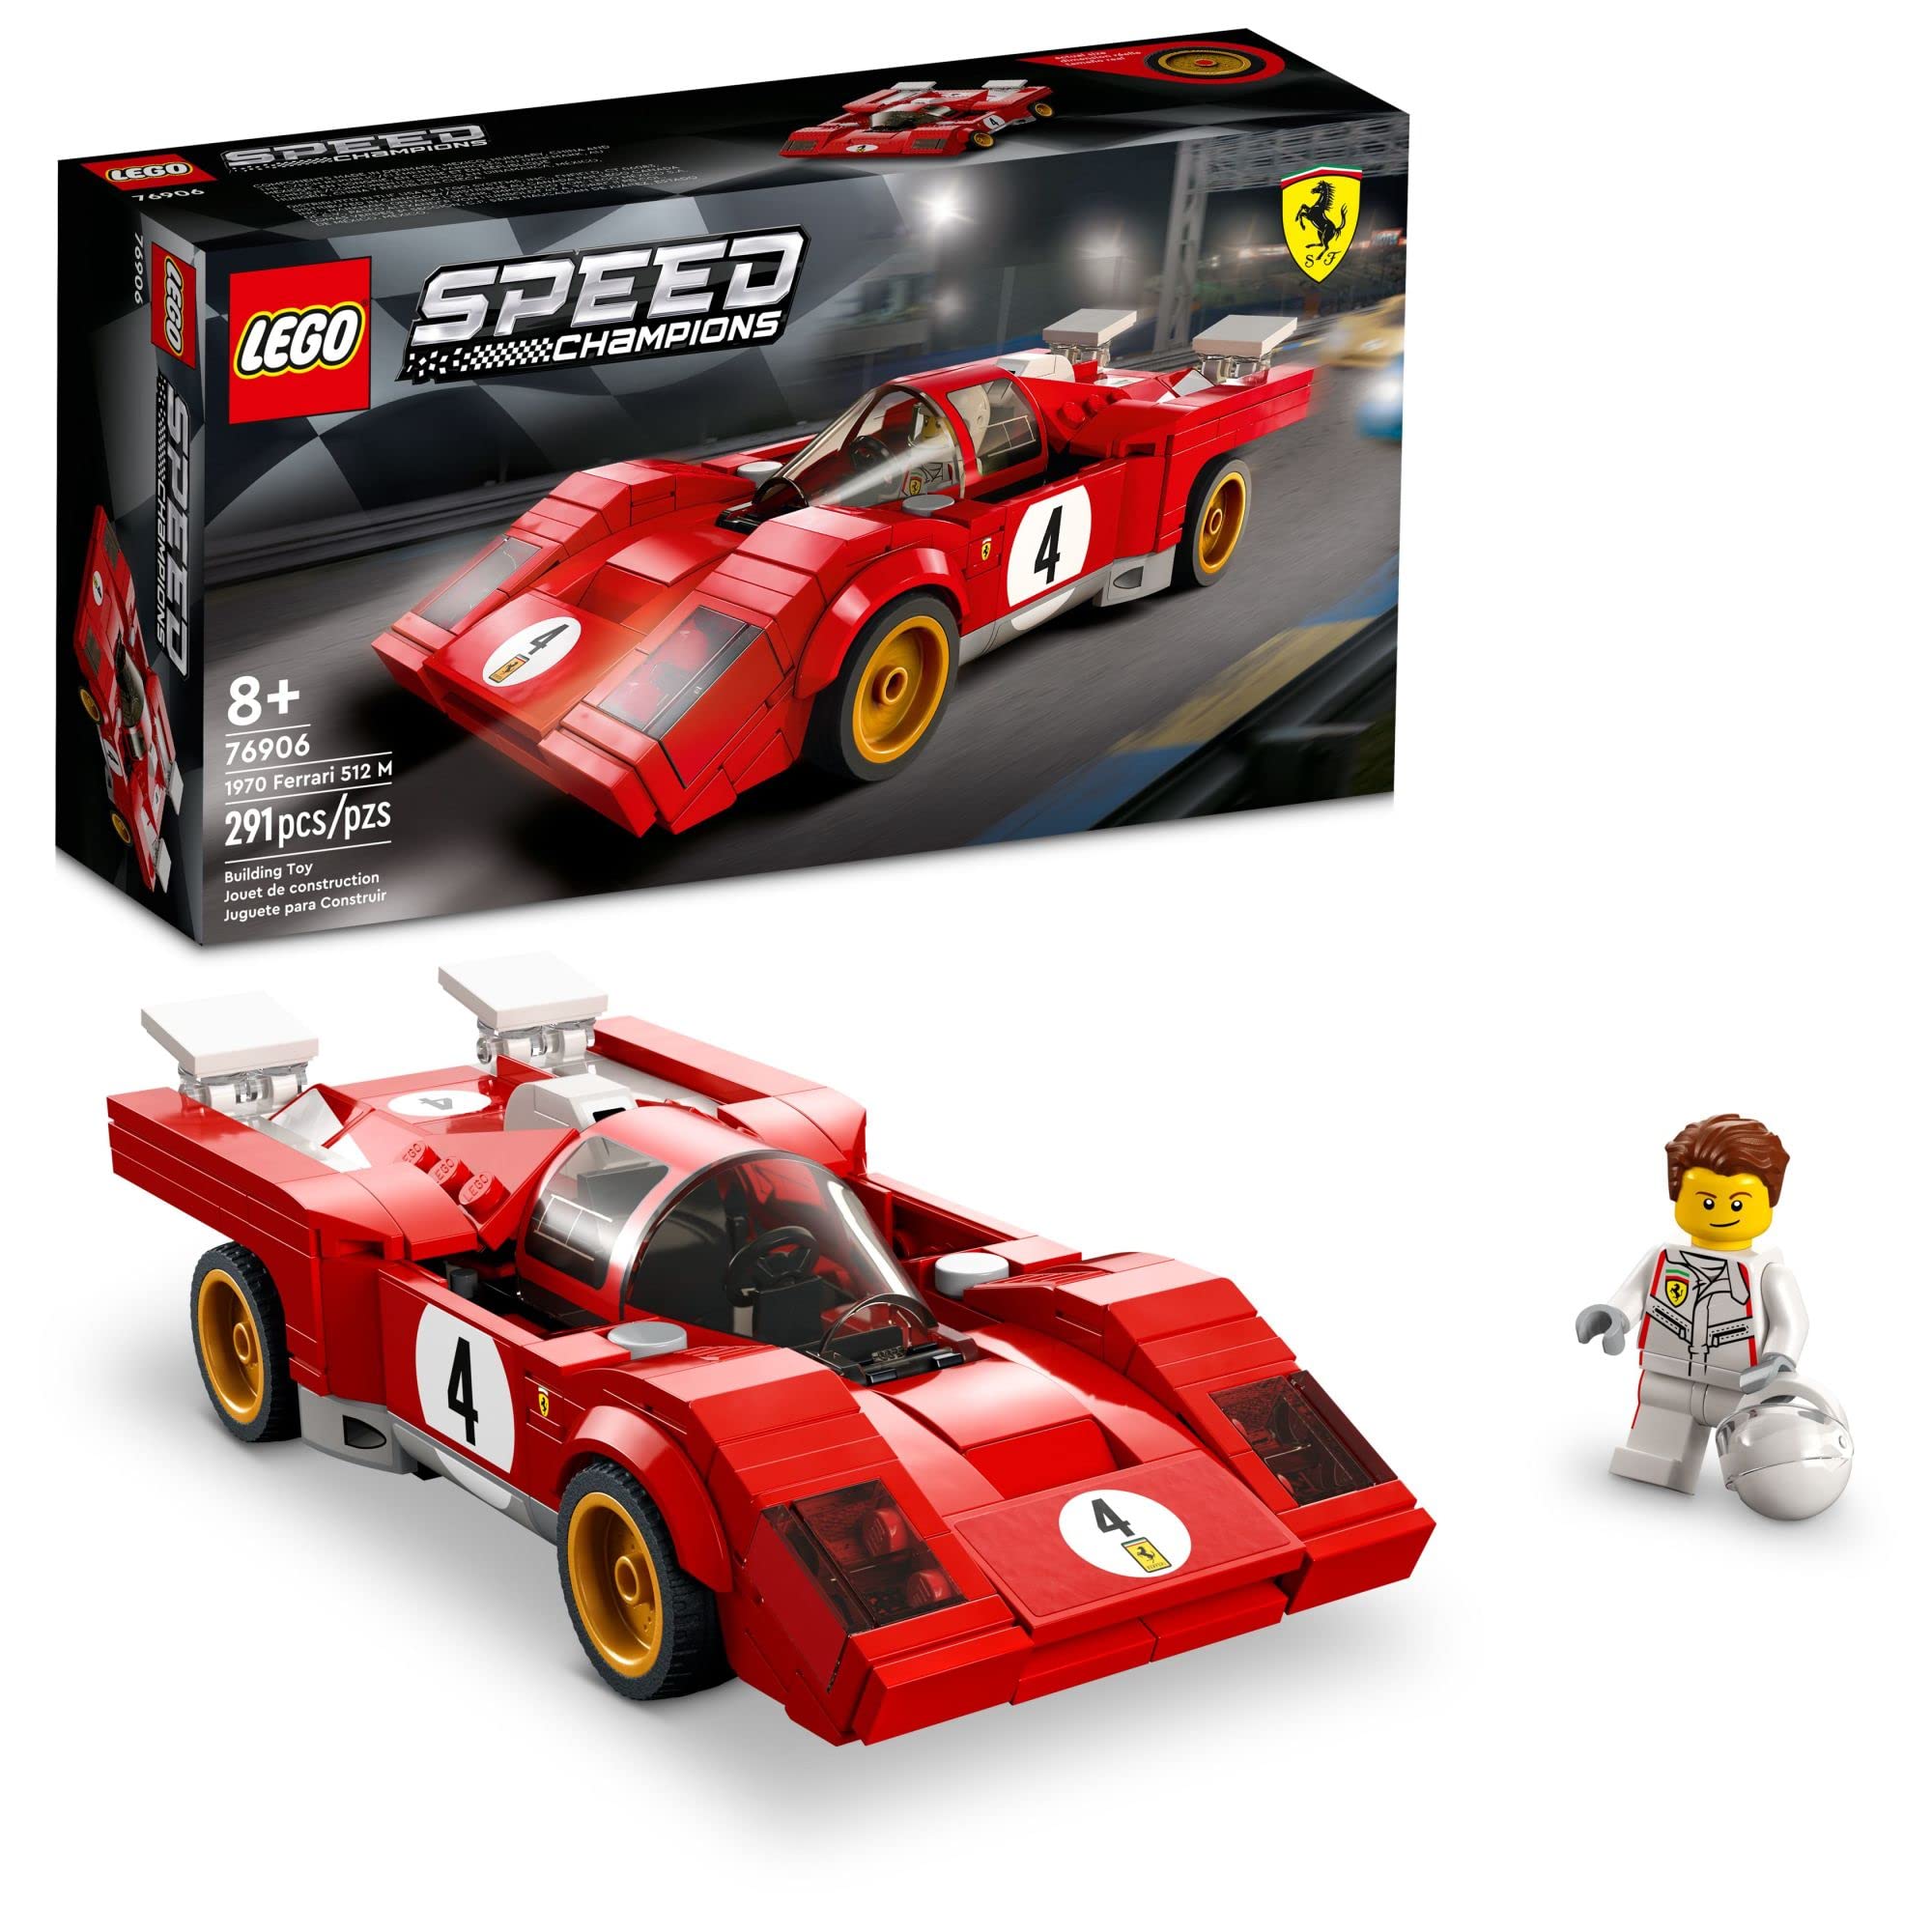 LEGO Speed Champions Collectible Sports Car Toy Building Set w/ Mini Figure (Ferrari 512, Aston Martin DB5, Toyota GR Supra) $16 + Free Shipping w/ Prime or on $35+